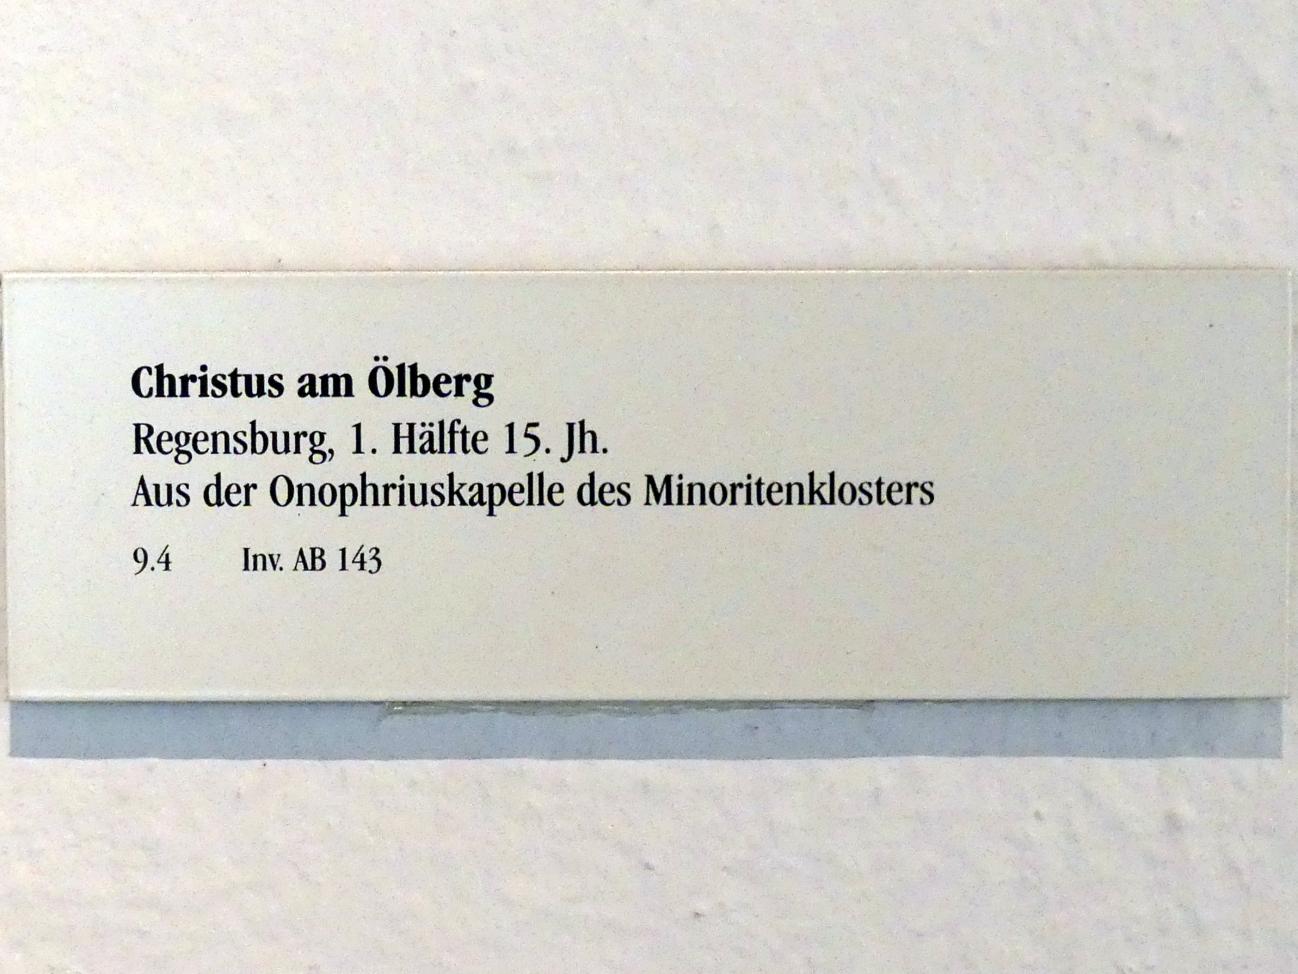 Christus am Ölberg, Regensburg, ehem. Franziskanerkloster St. Salvator, heute Museum, jetzt Regensburg, Historisches Museum, 1. Hälfte 15. Jhd., Bild 2/2